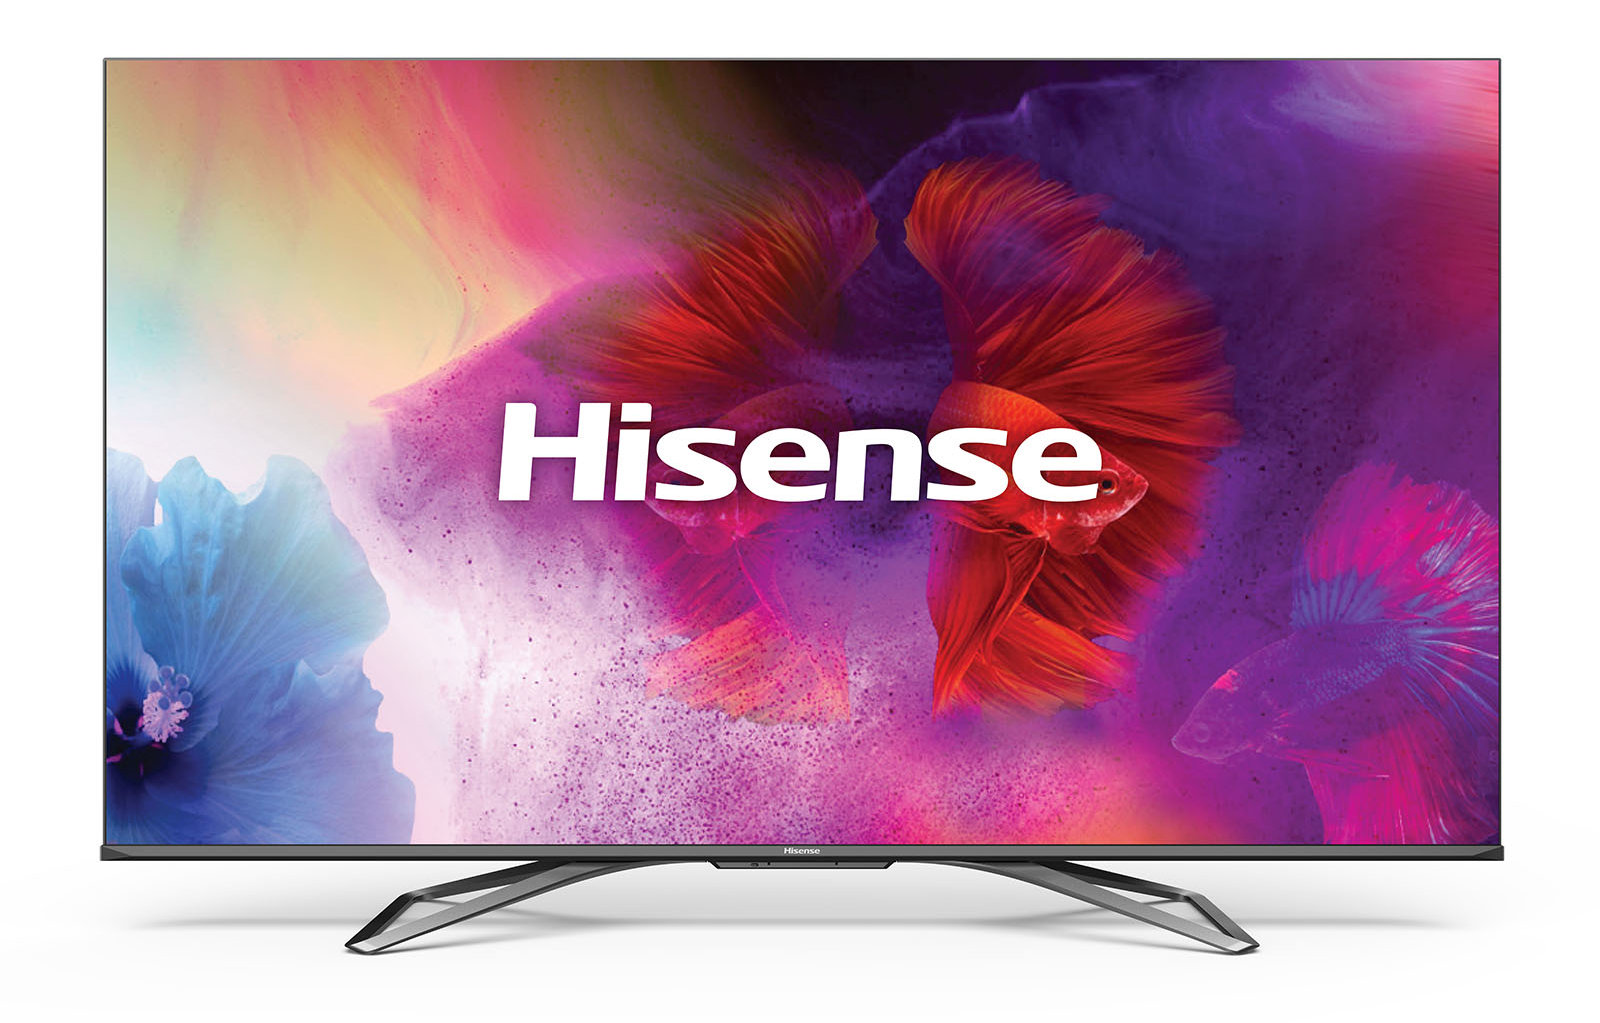 Hisense H9G 4K quantum dot TVs